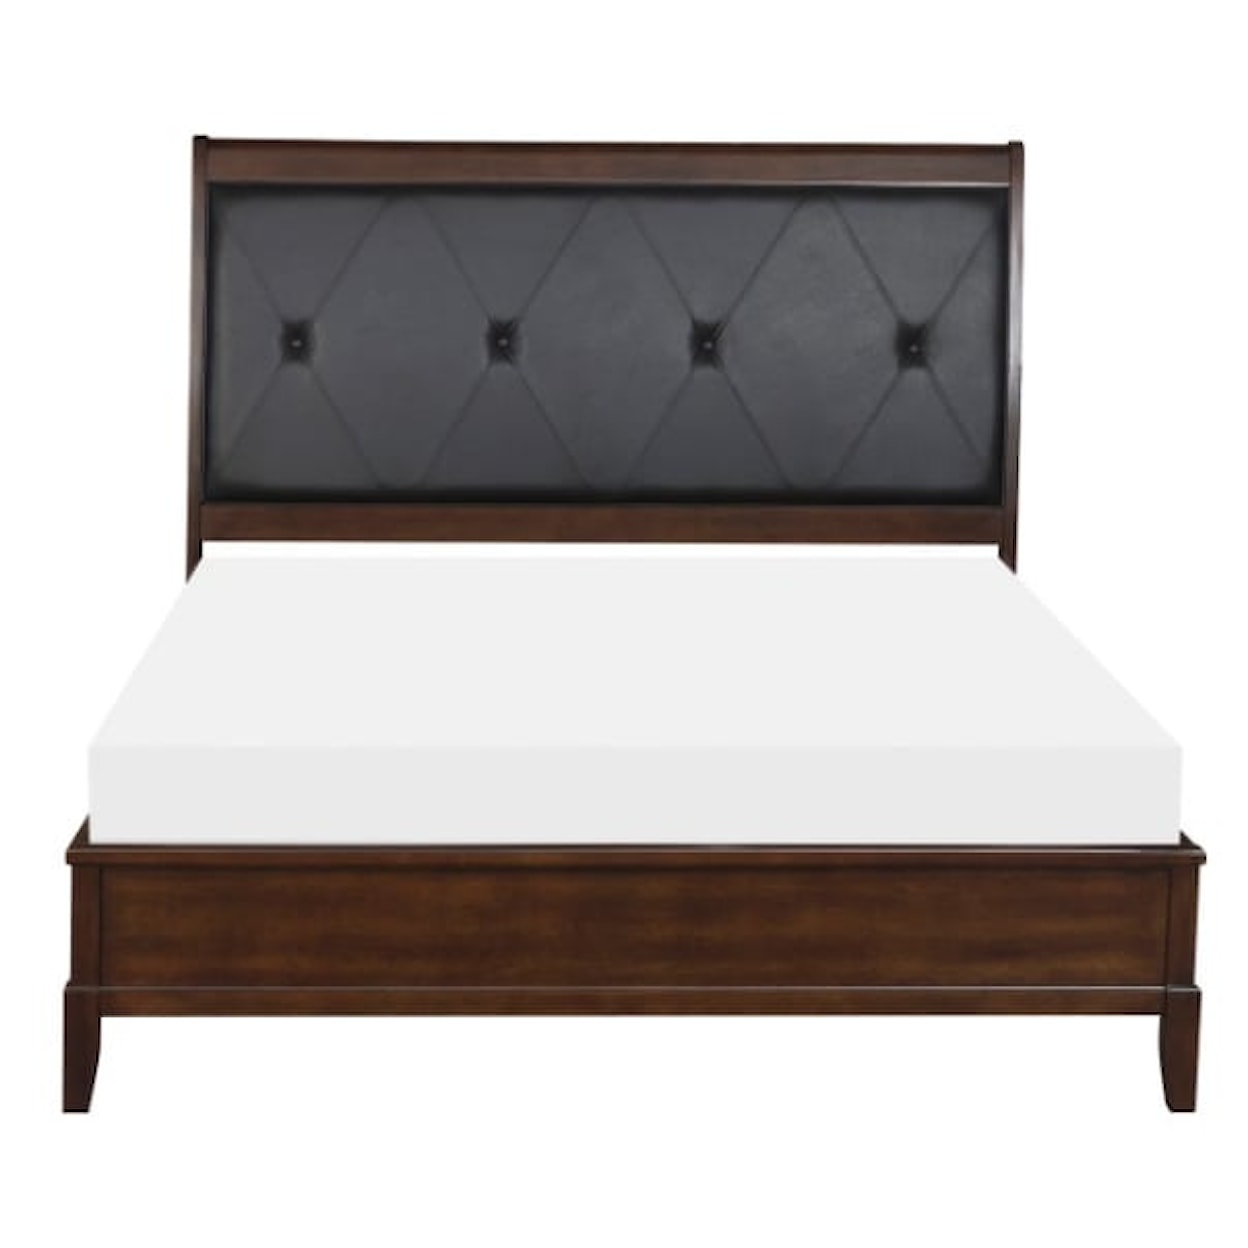 Homelegance Furniture Cotterill California King Panel Bed